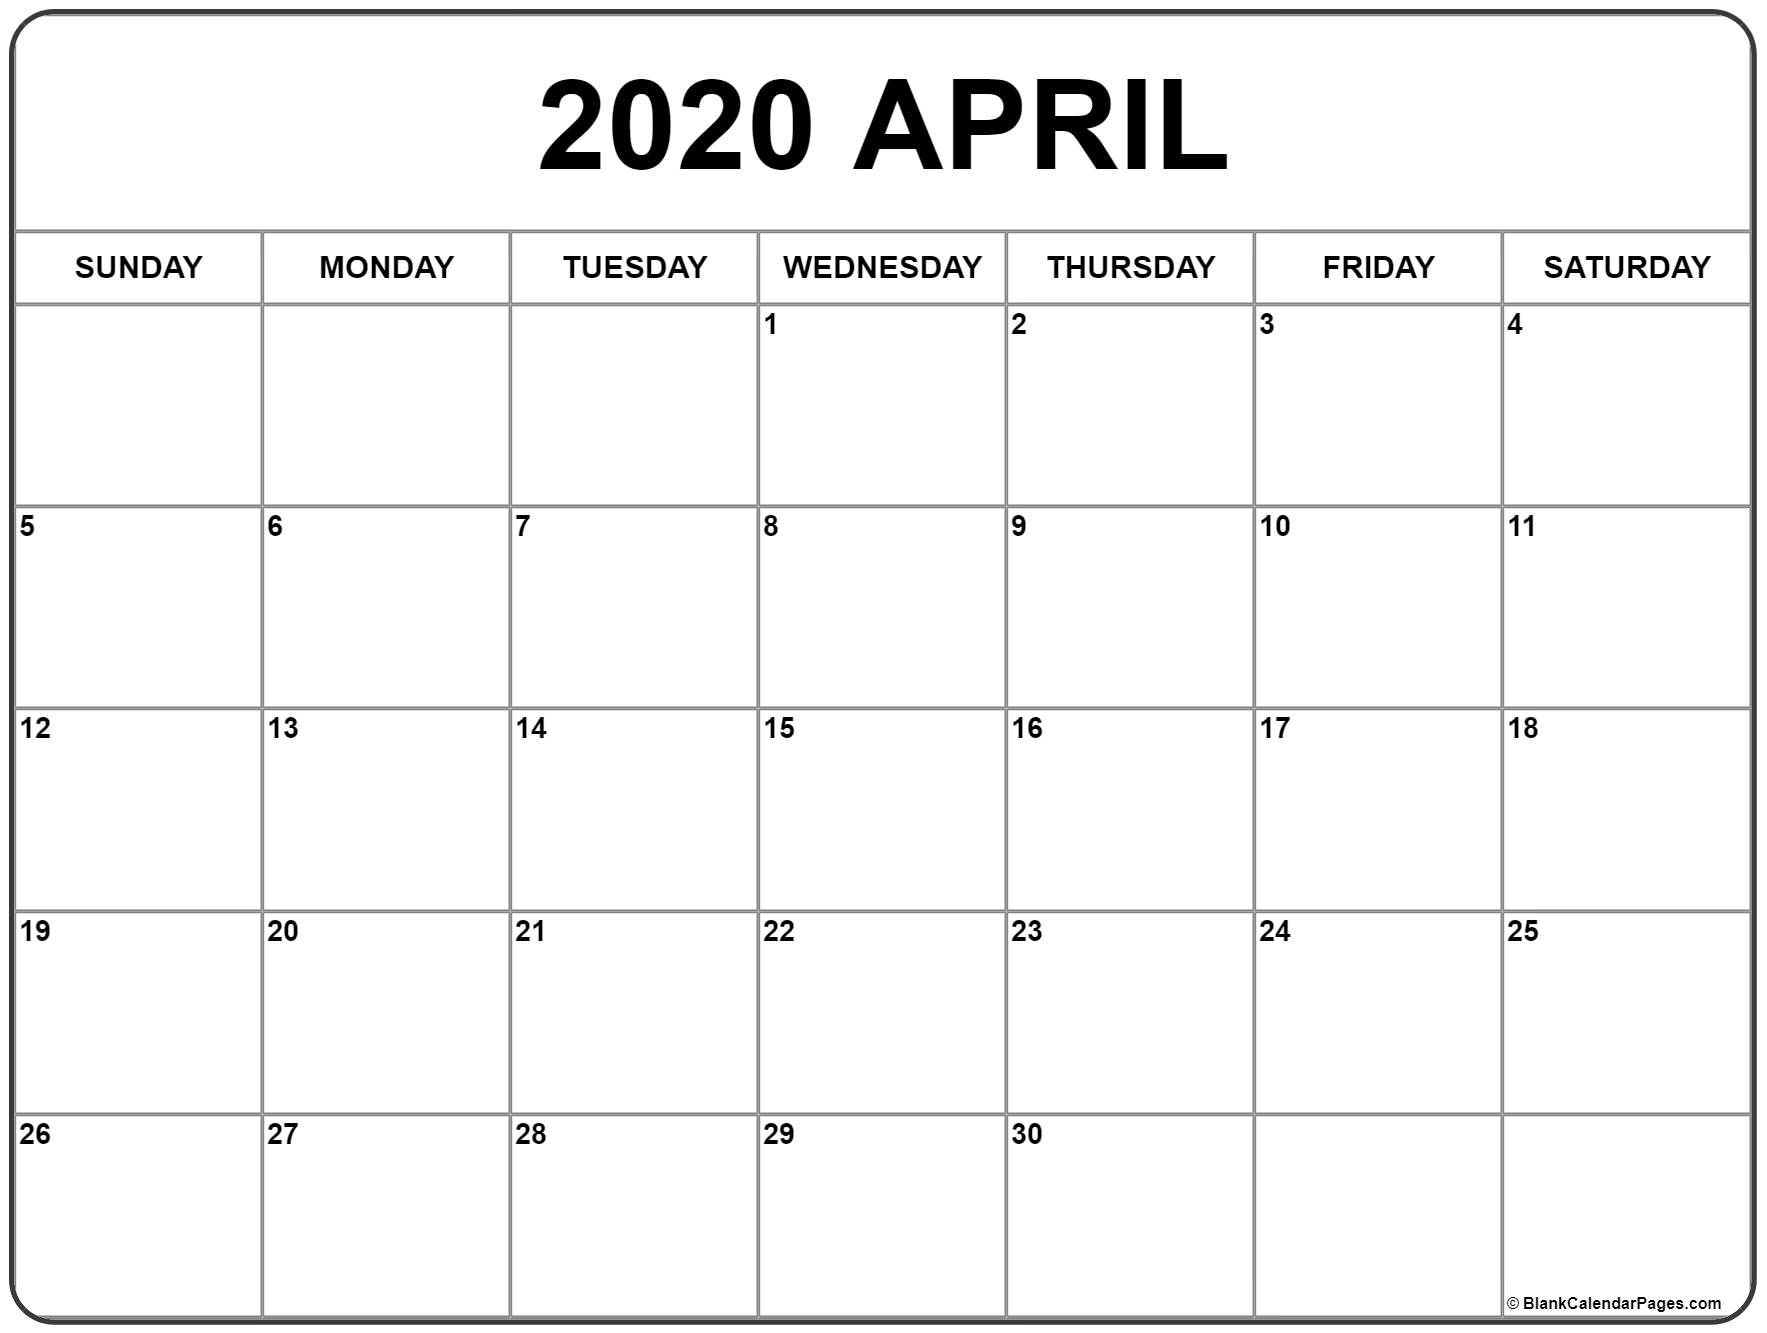 April 2020 Calendar | Free Printable Monthly Calendars within Free Monthly Printable Calendar 2020